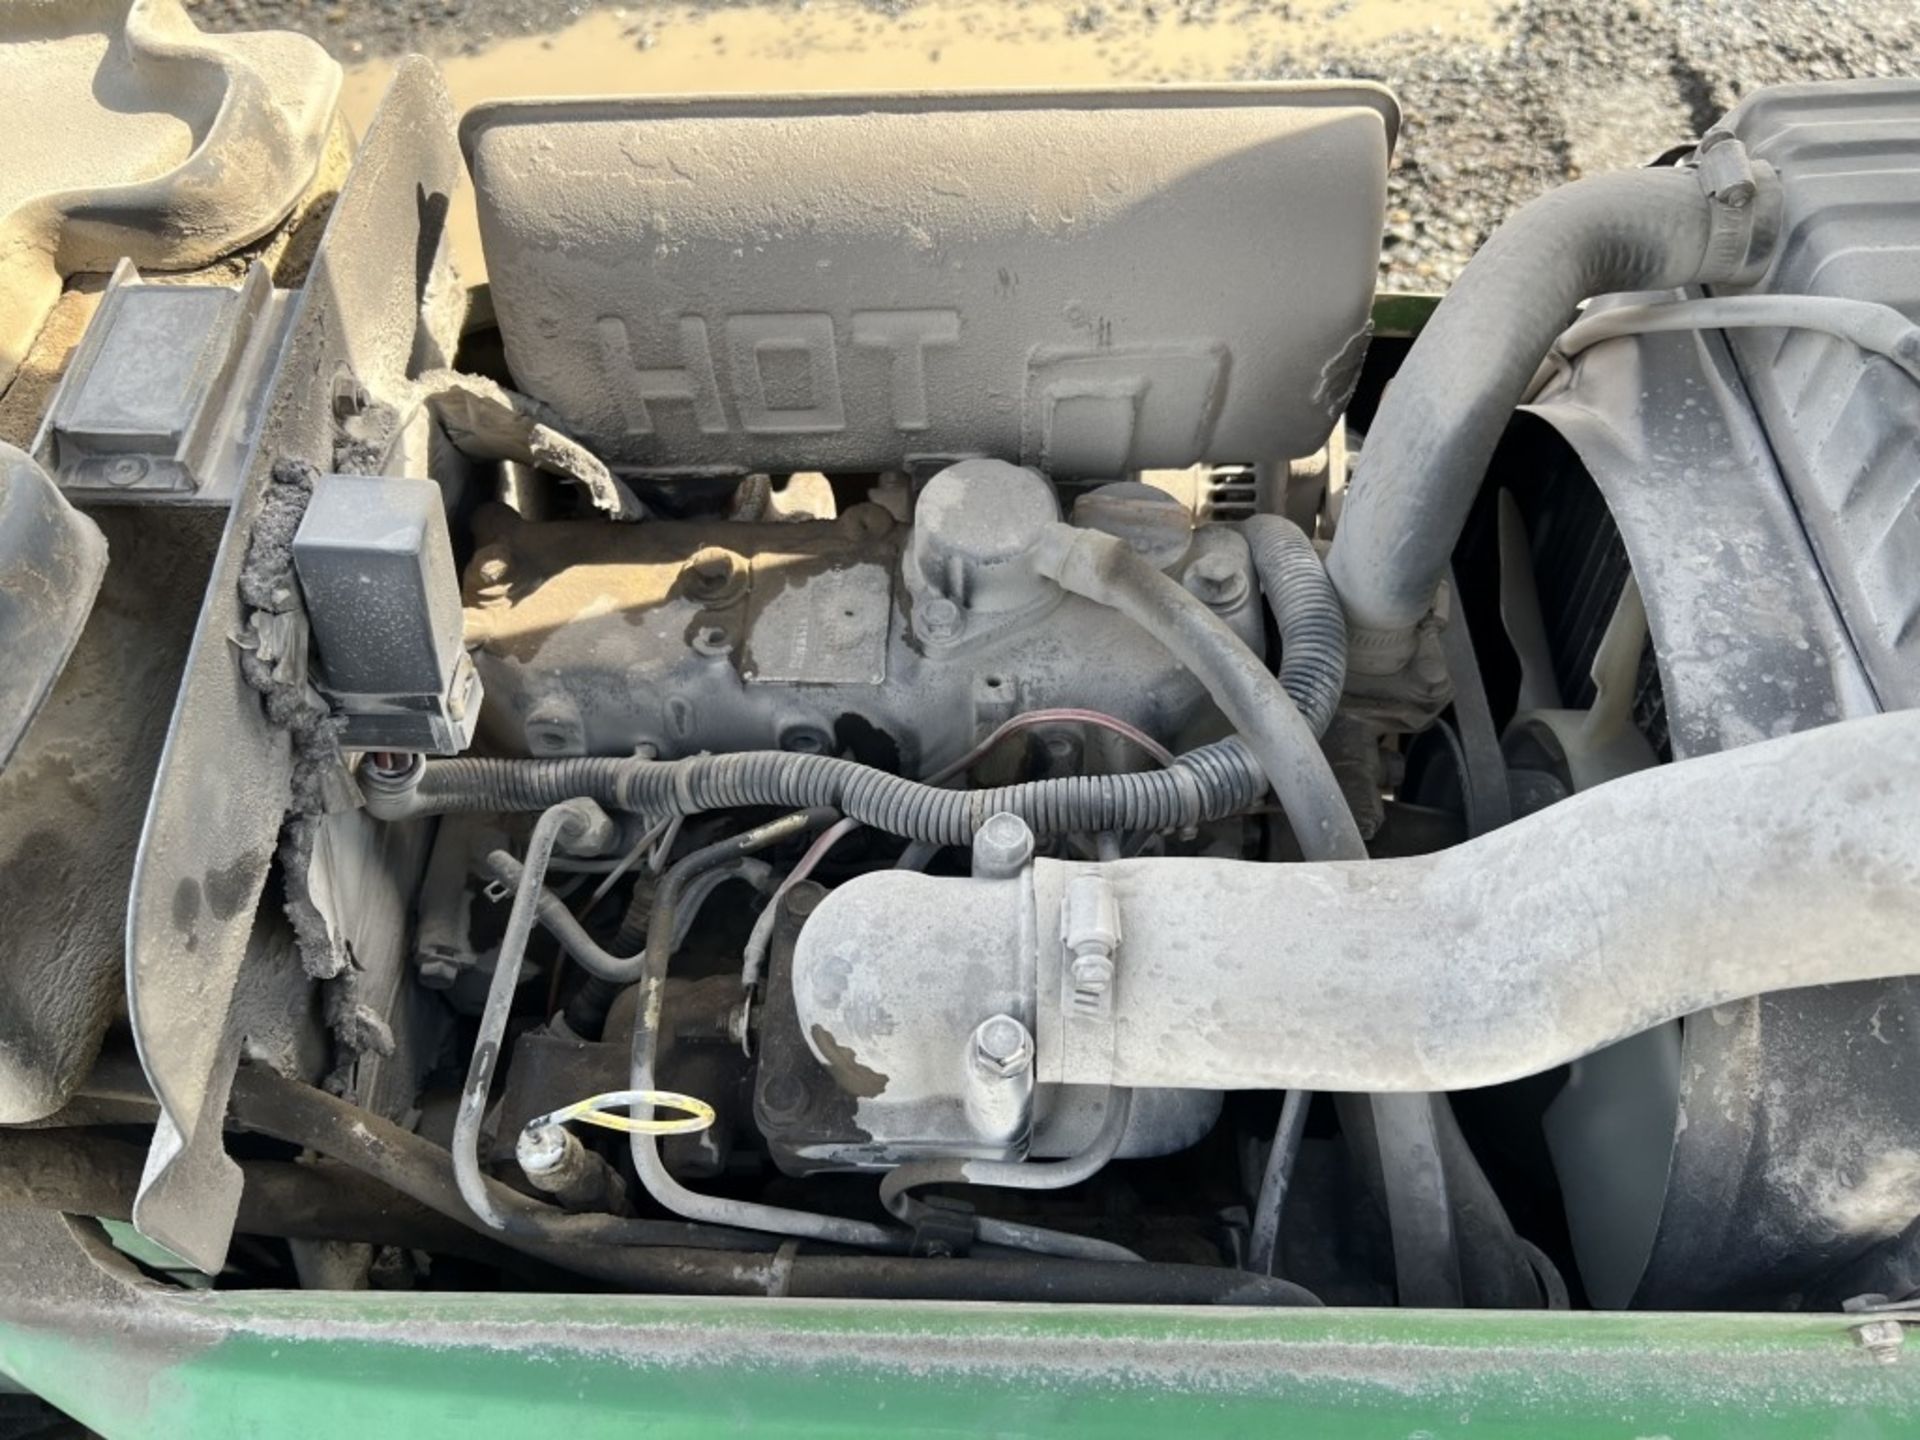 1994 John Deere 855 Utility Tractor - Image 9 of 17